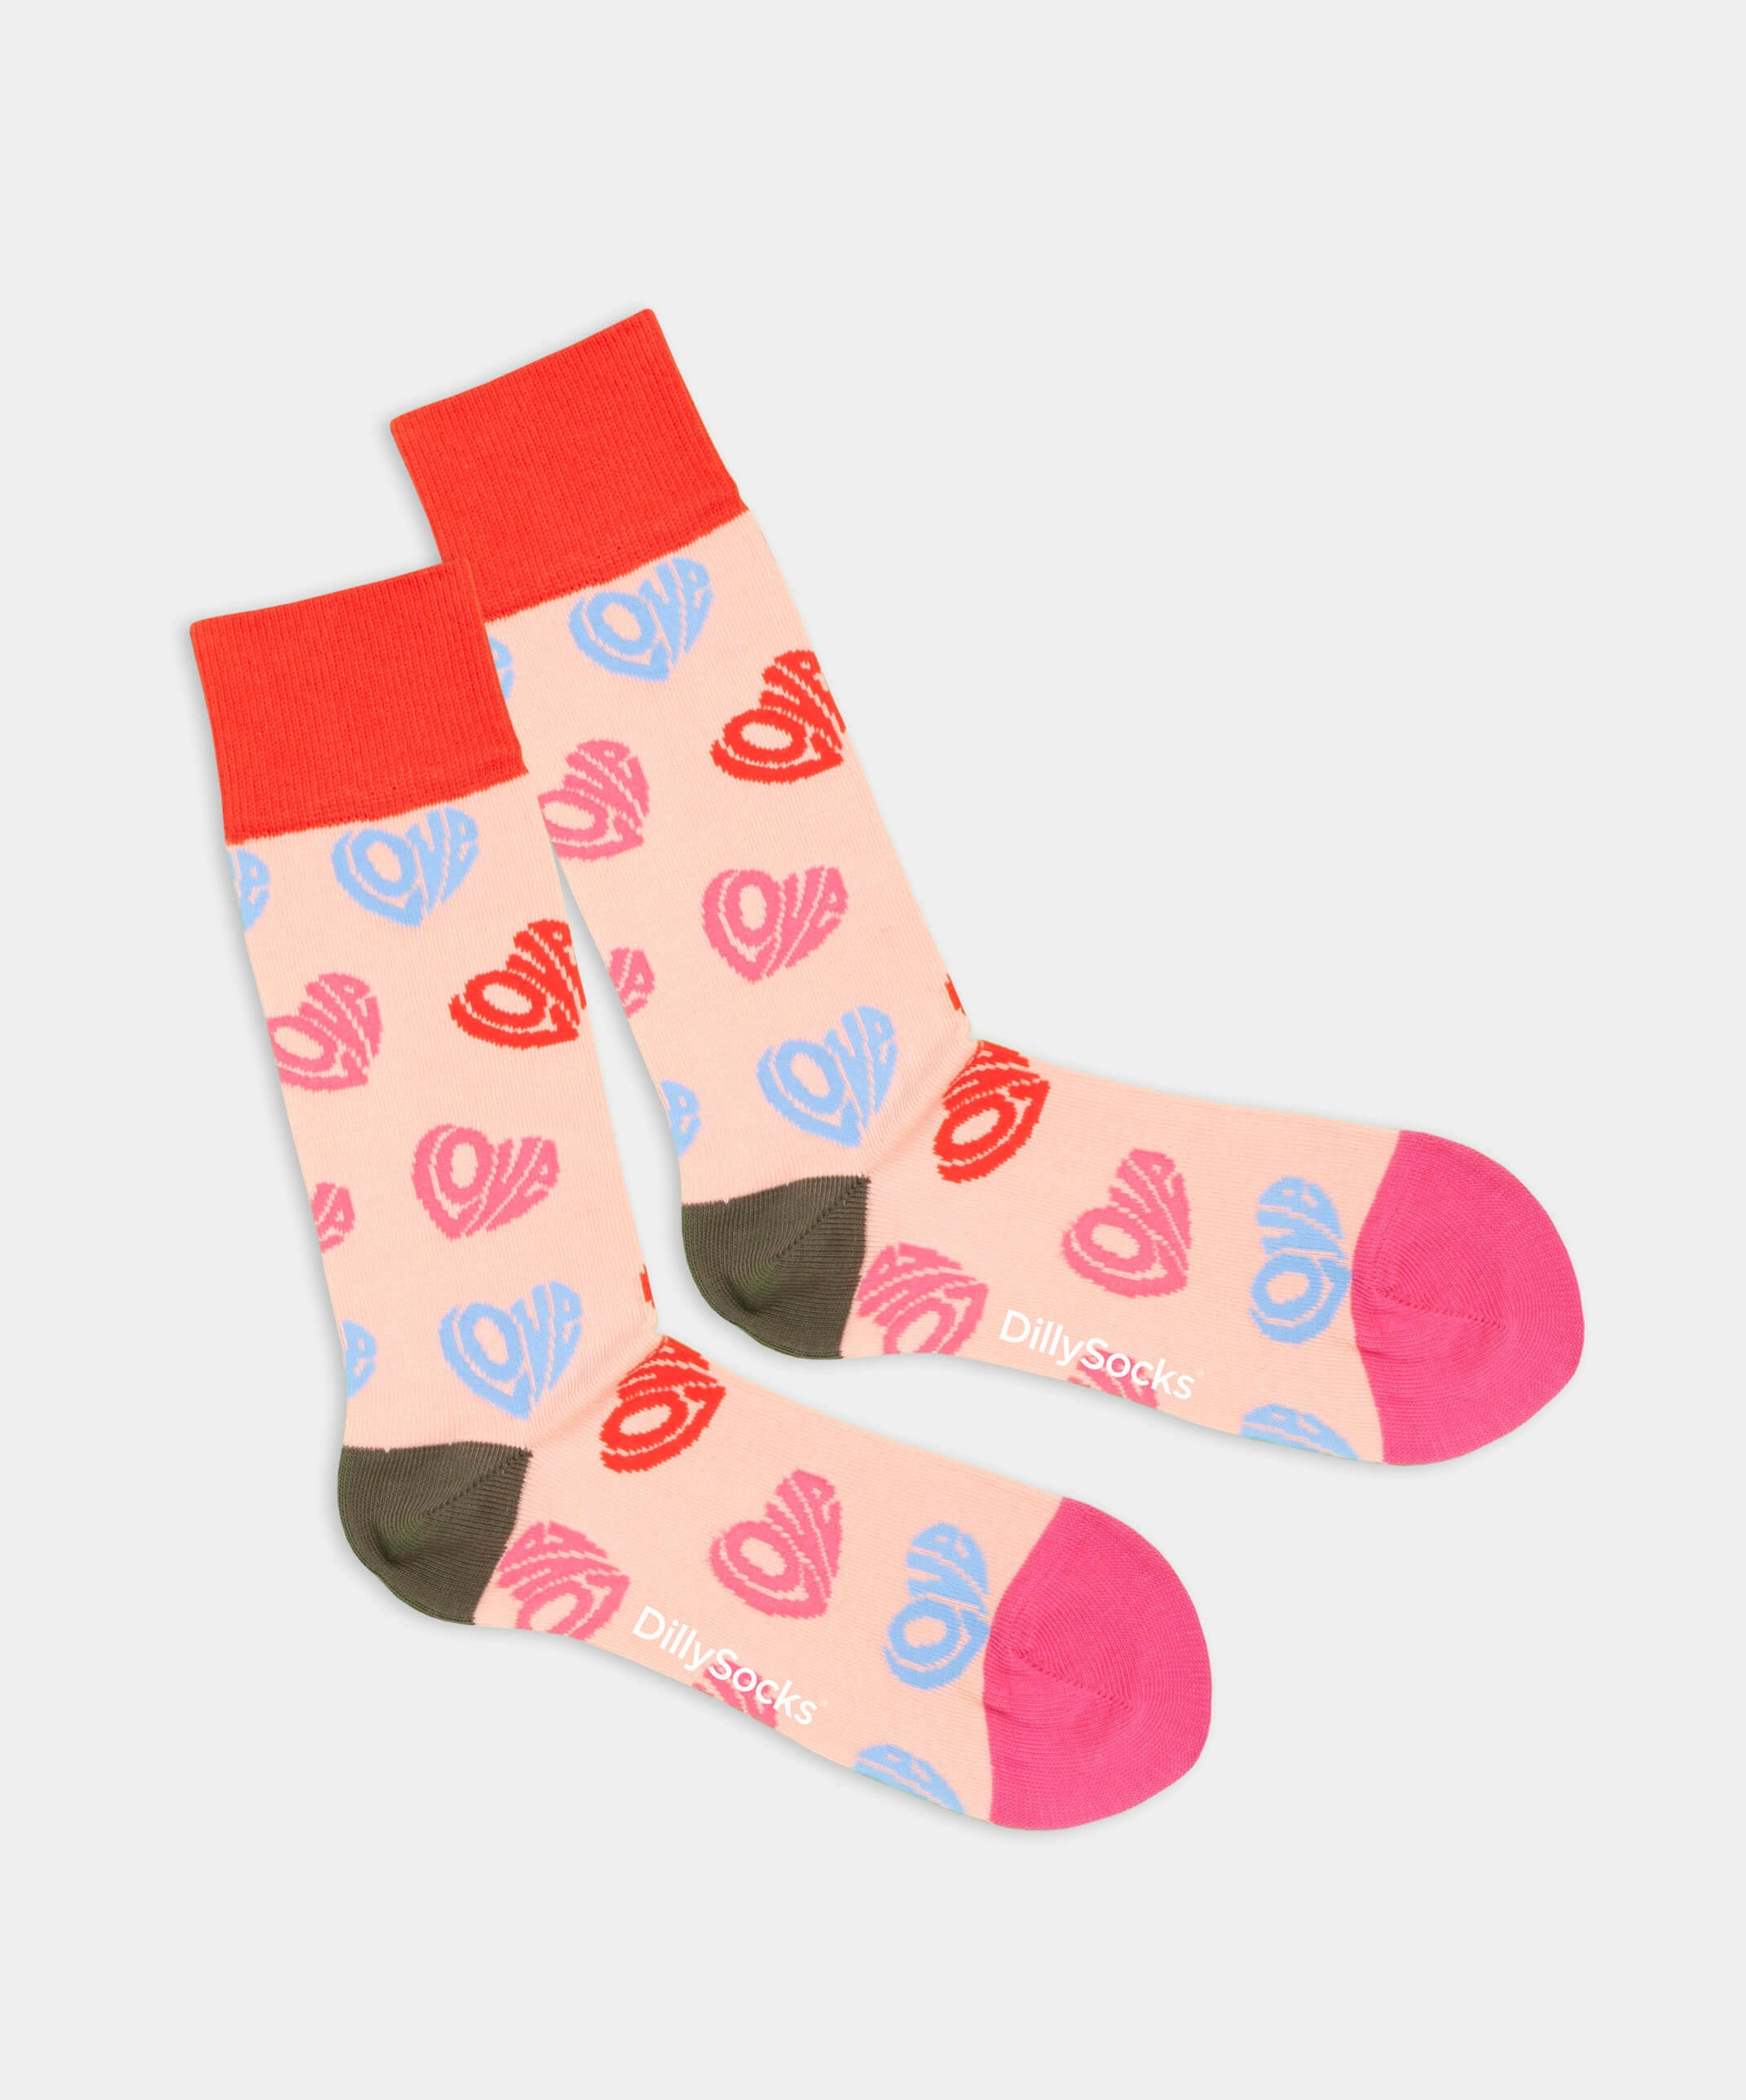 - Socken in Rosa mit Herz Motiv/Muster